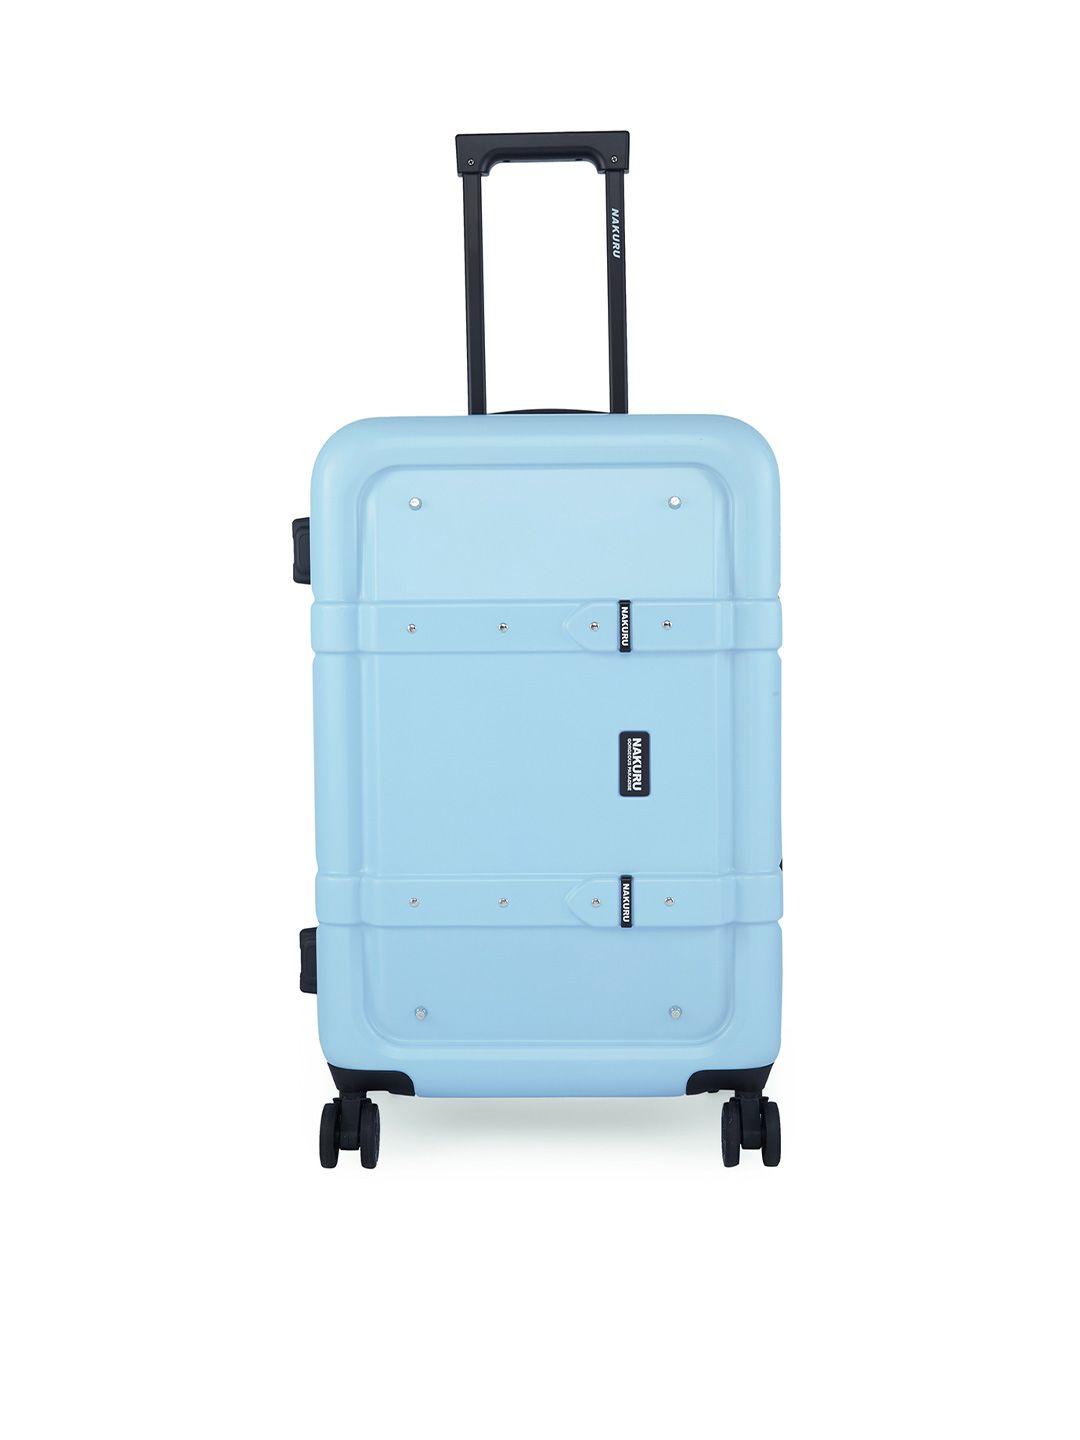 nakuru ywd-2141 blue color abs material hard 24" medium trolley